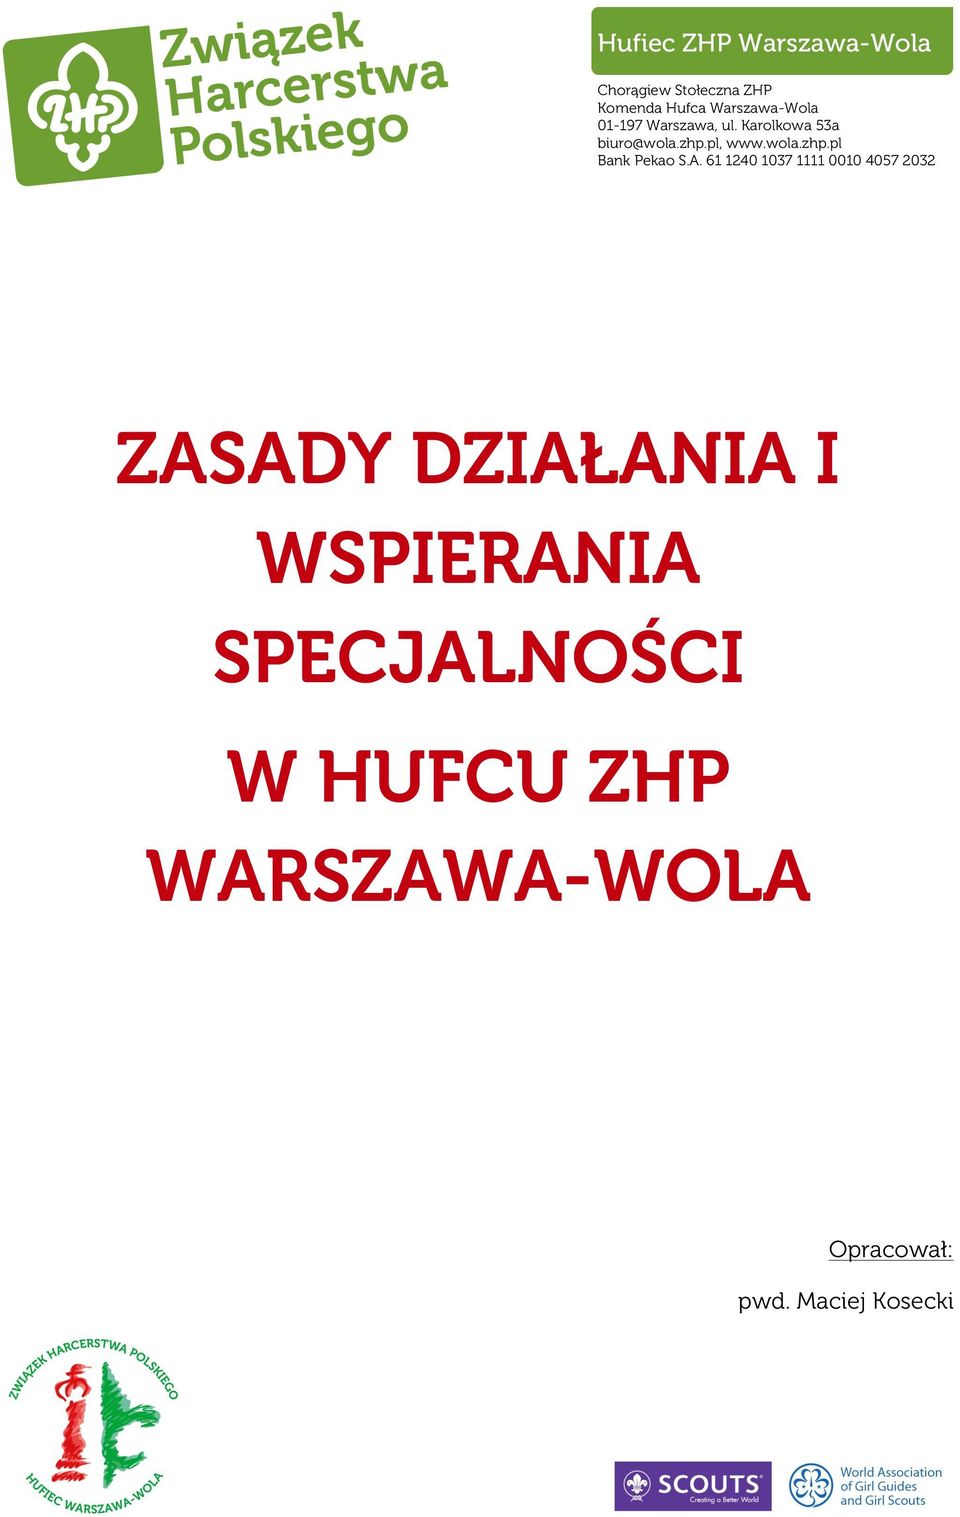 wola.zhp.pl Bank Pekao S.A.